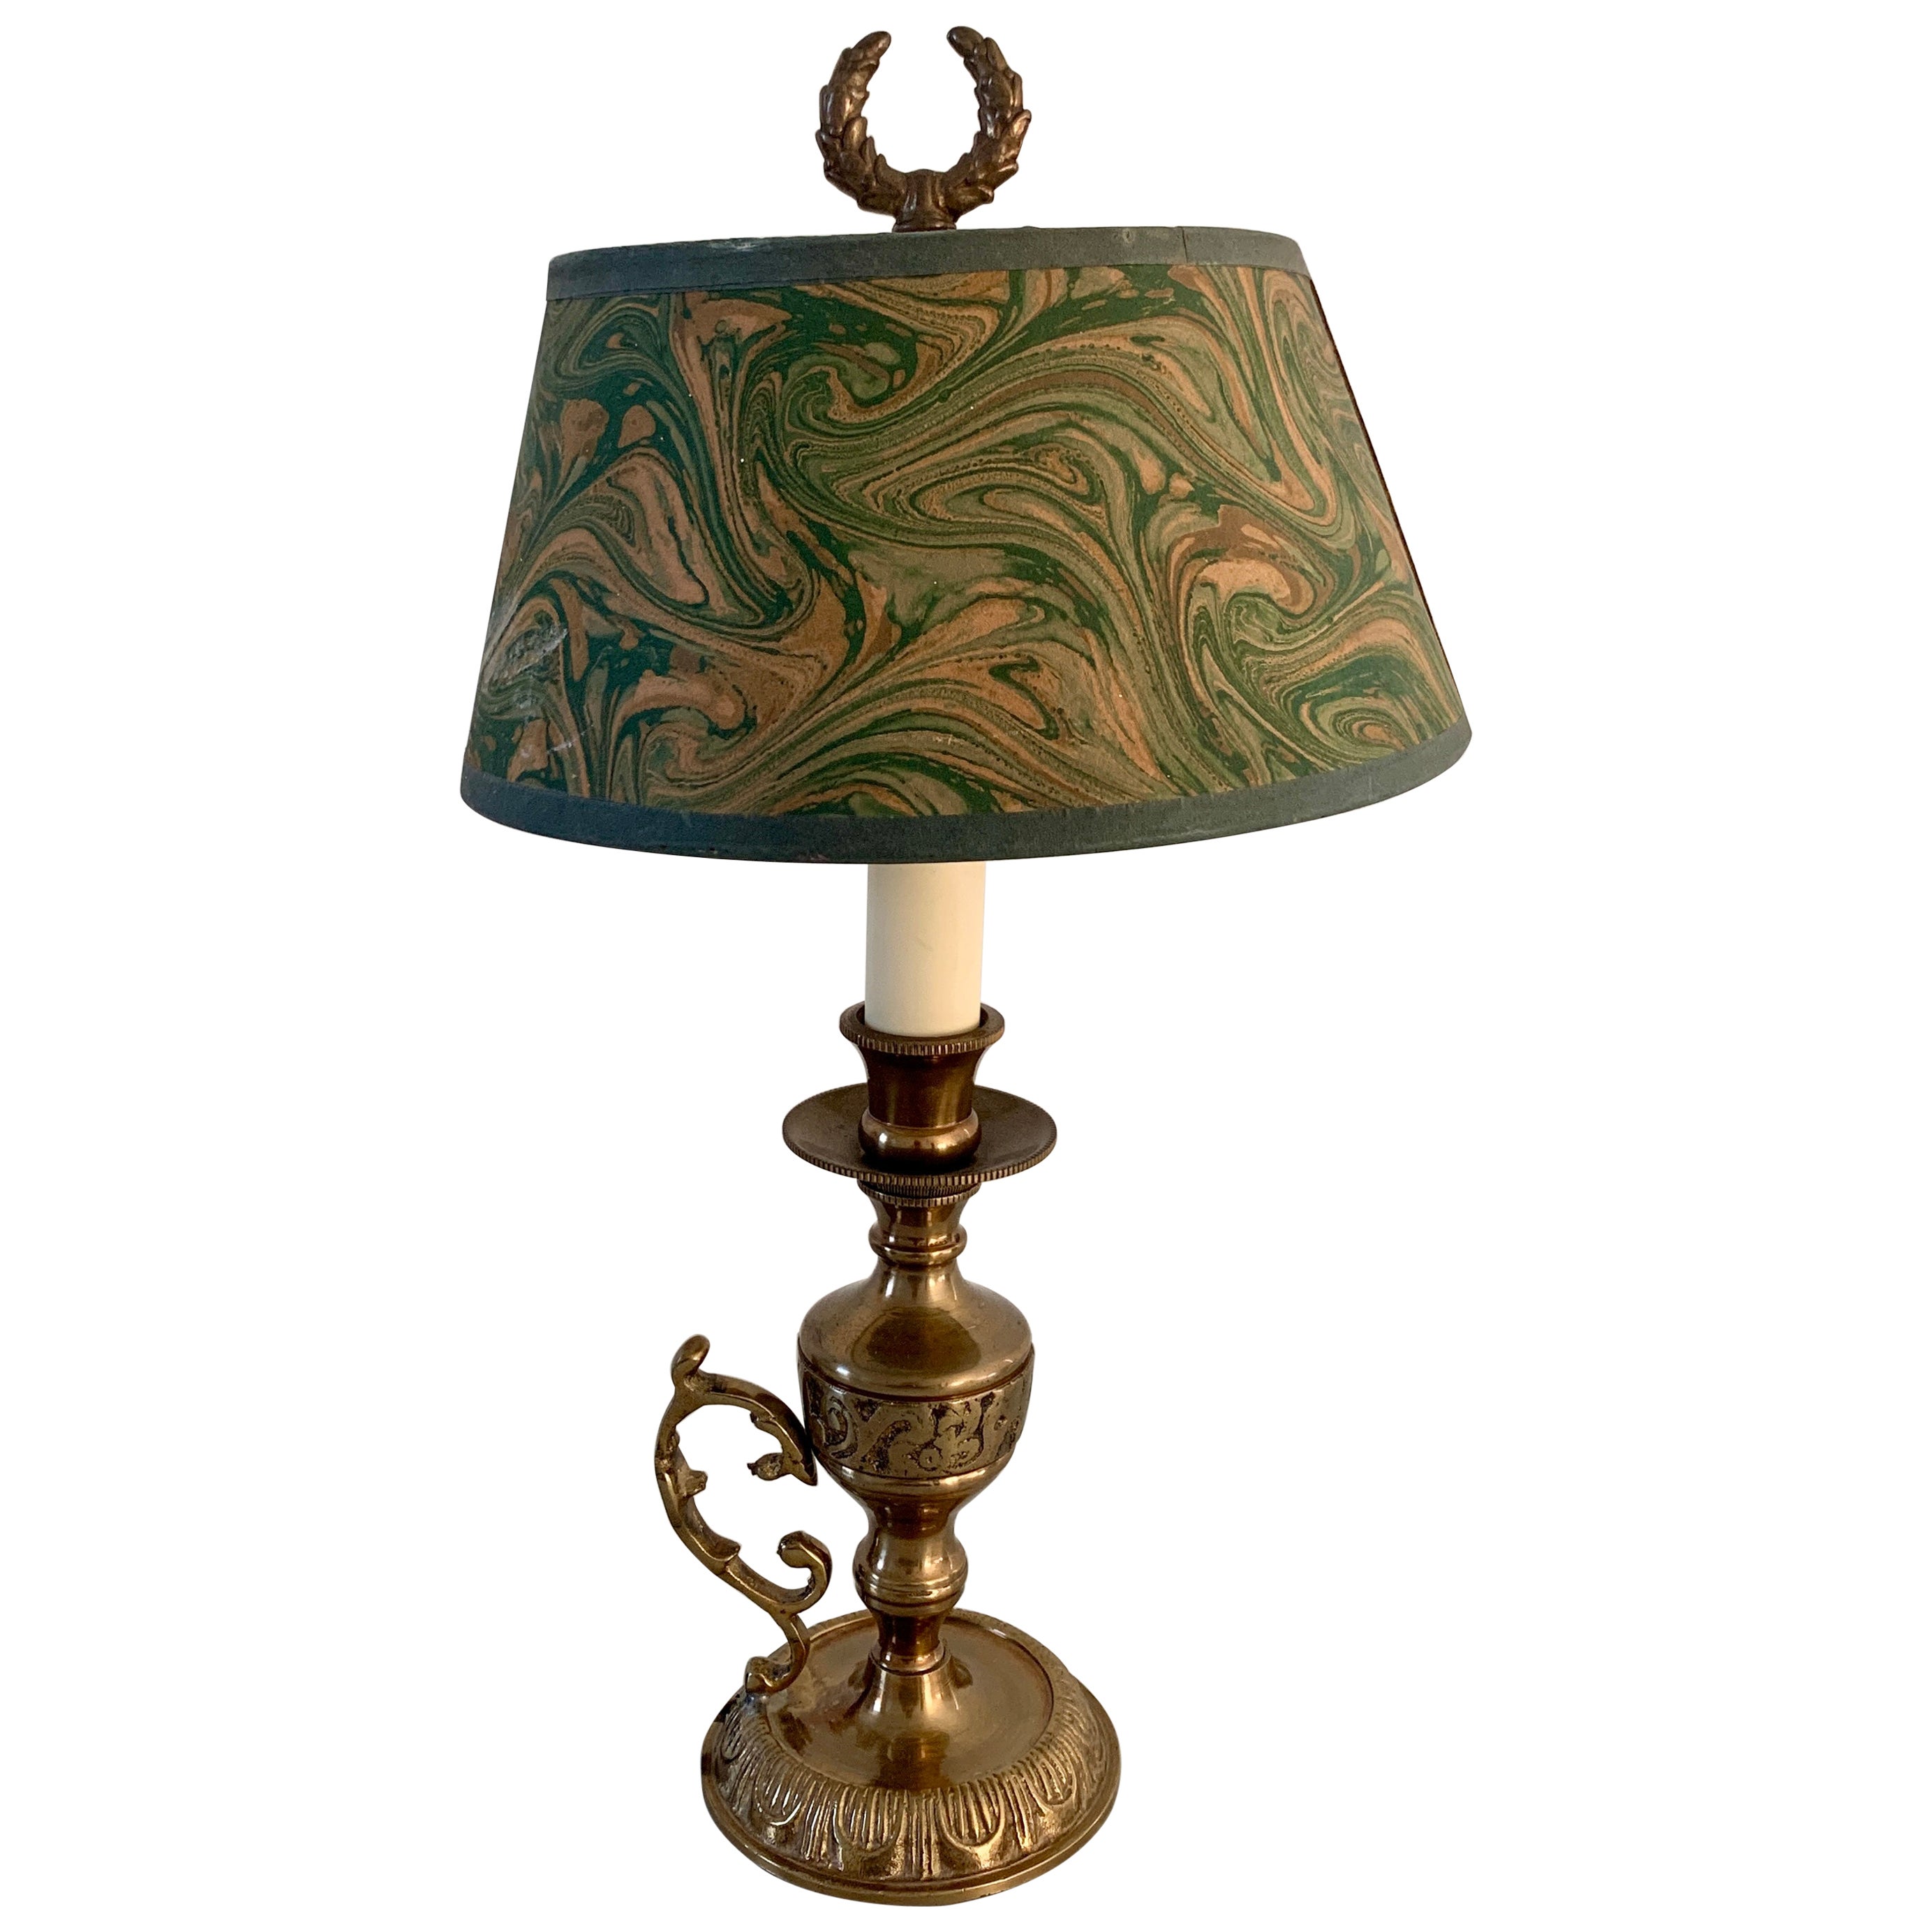 Brass Neoclassical Candlestick Lamp